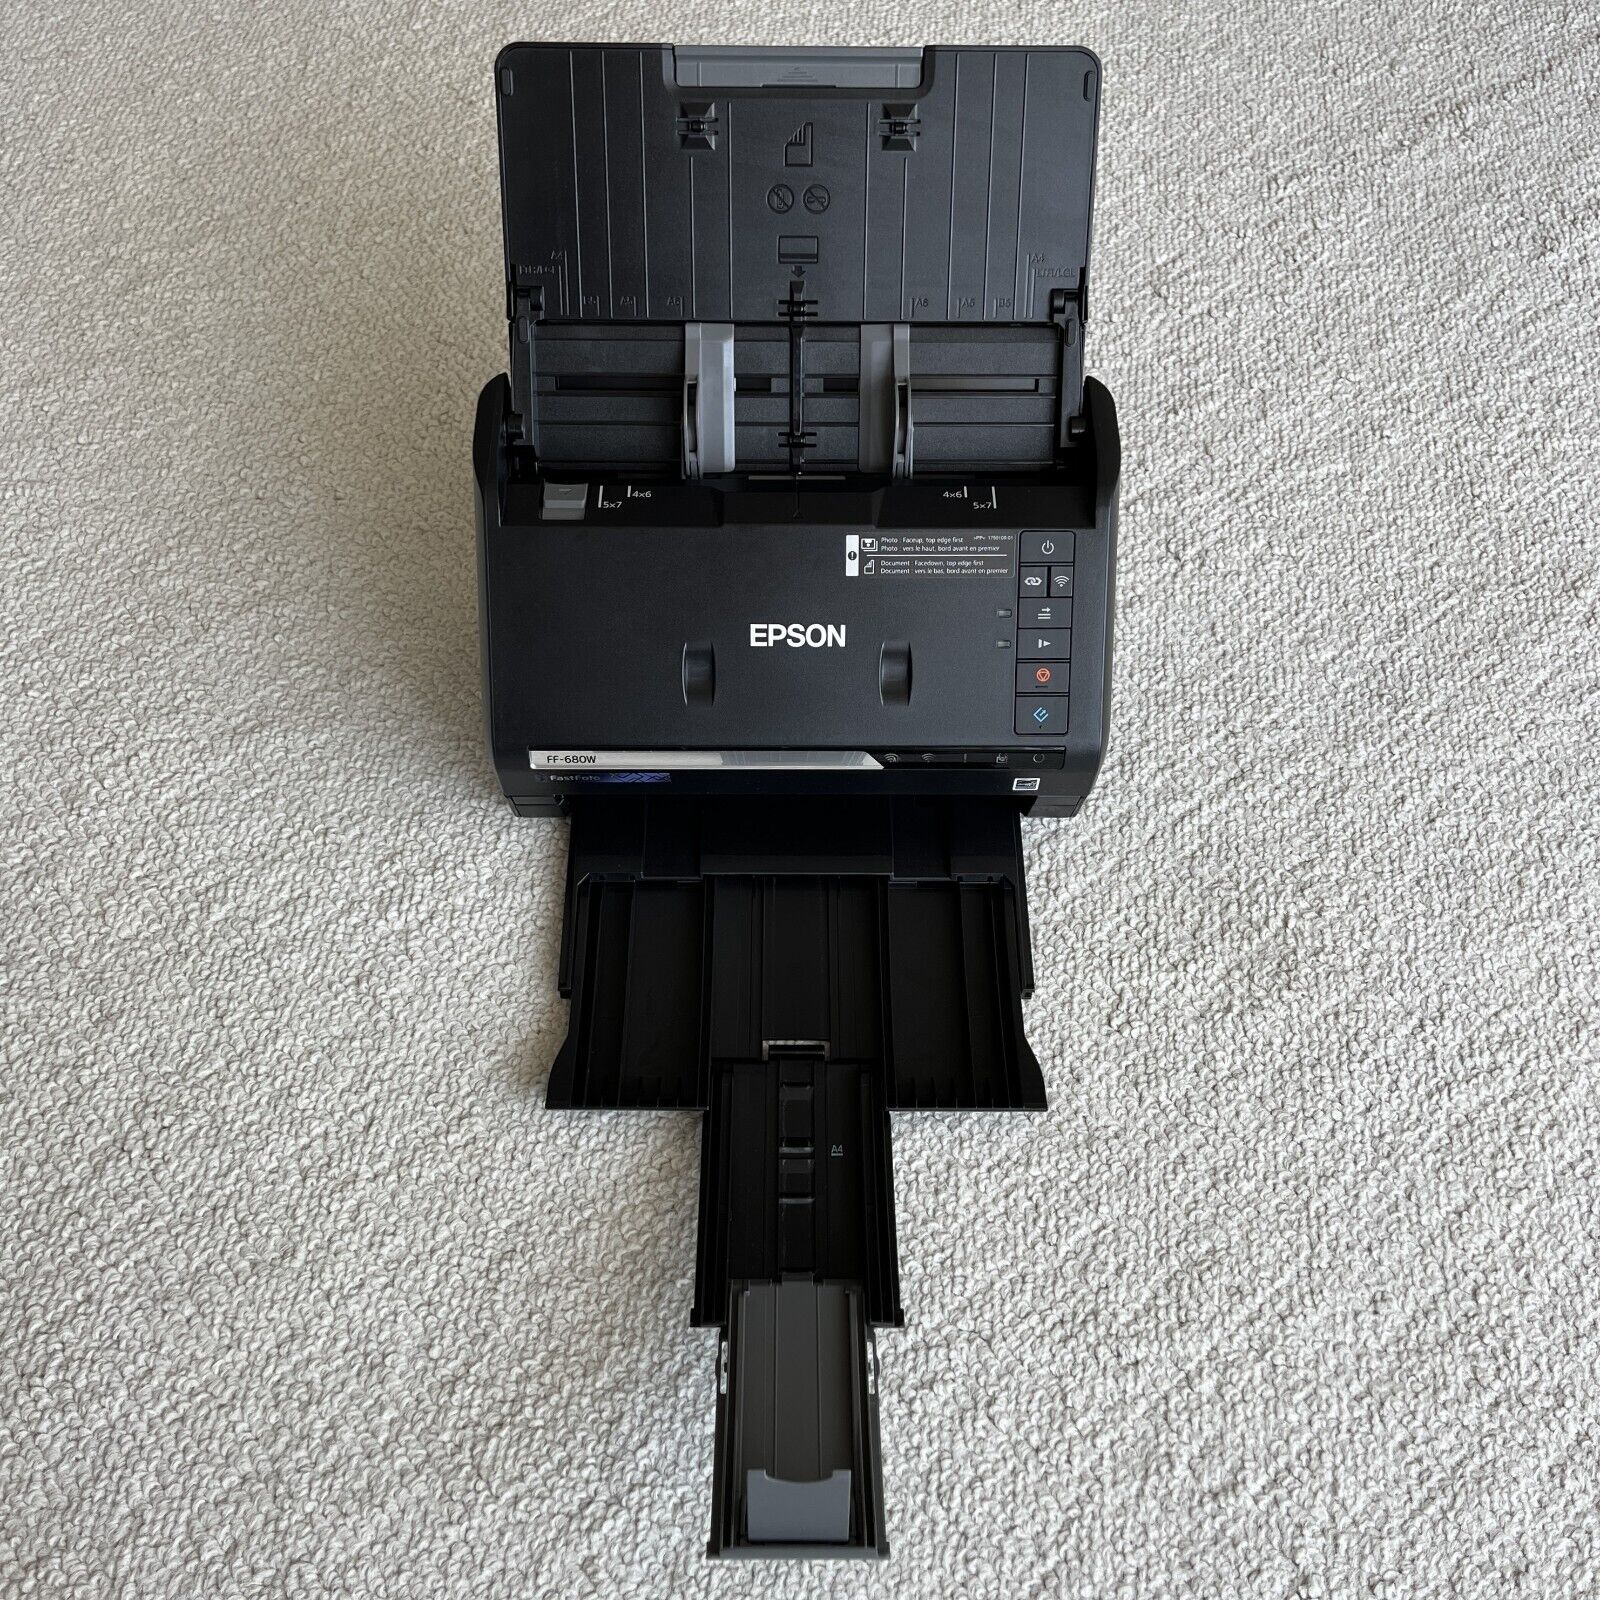 Epson Fastfoto FF-680W Wireless Photo & Document Scanner - Black